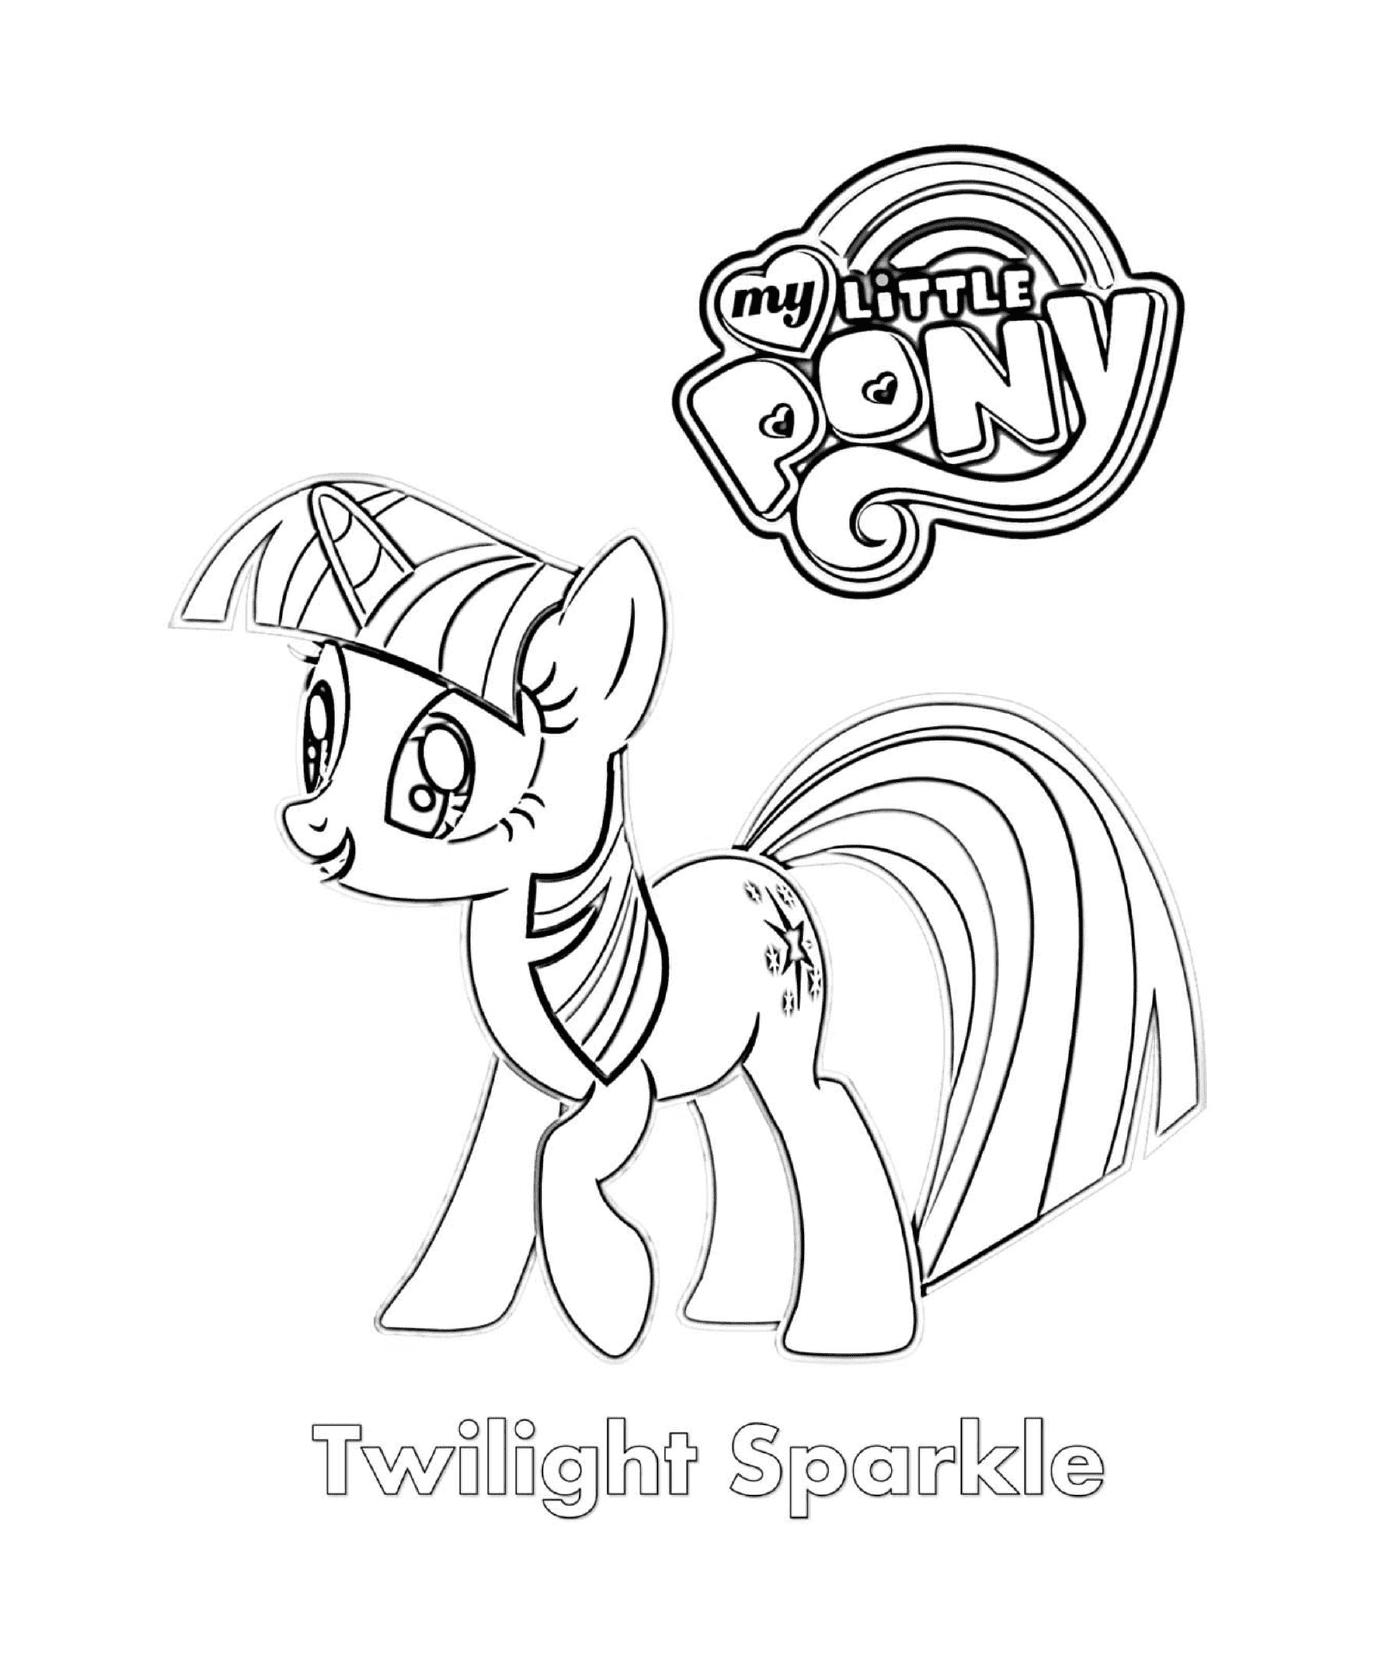  Twilight Sparkle, the pony named Twilight Sparkle 